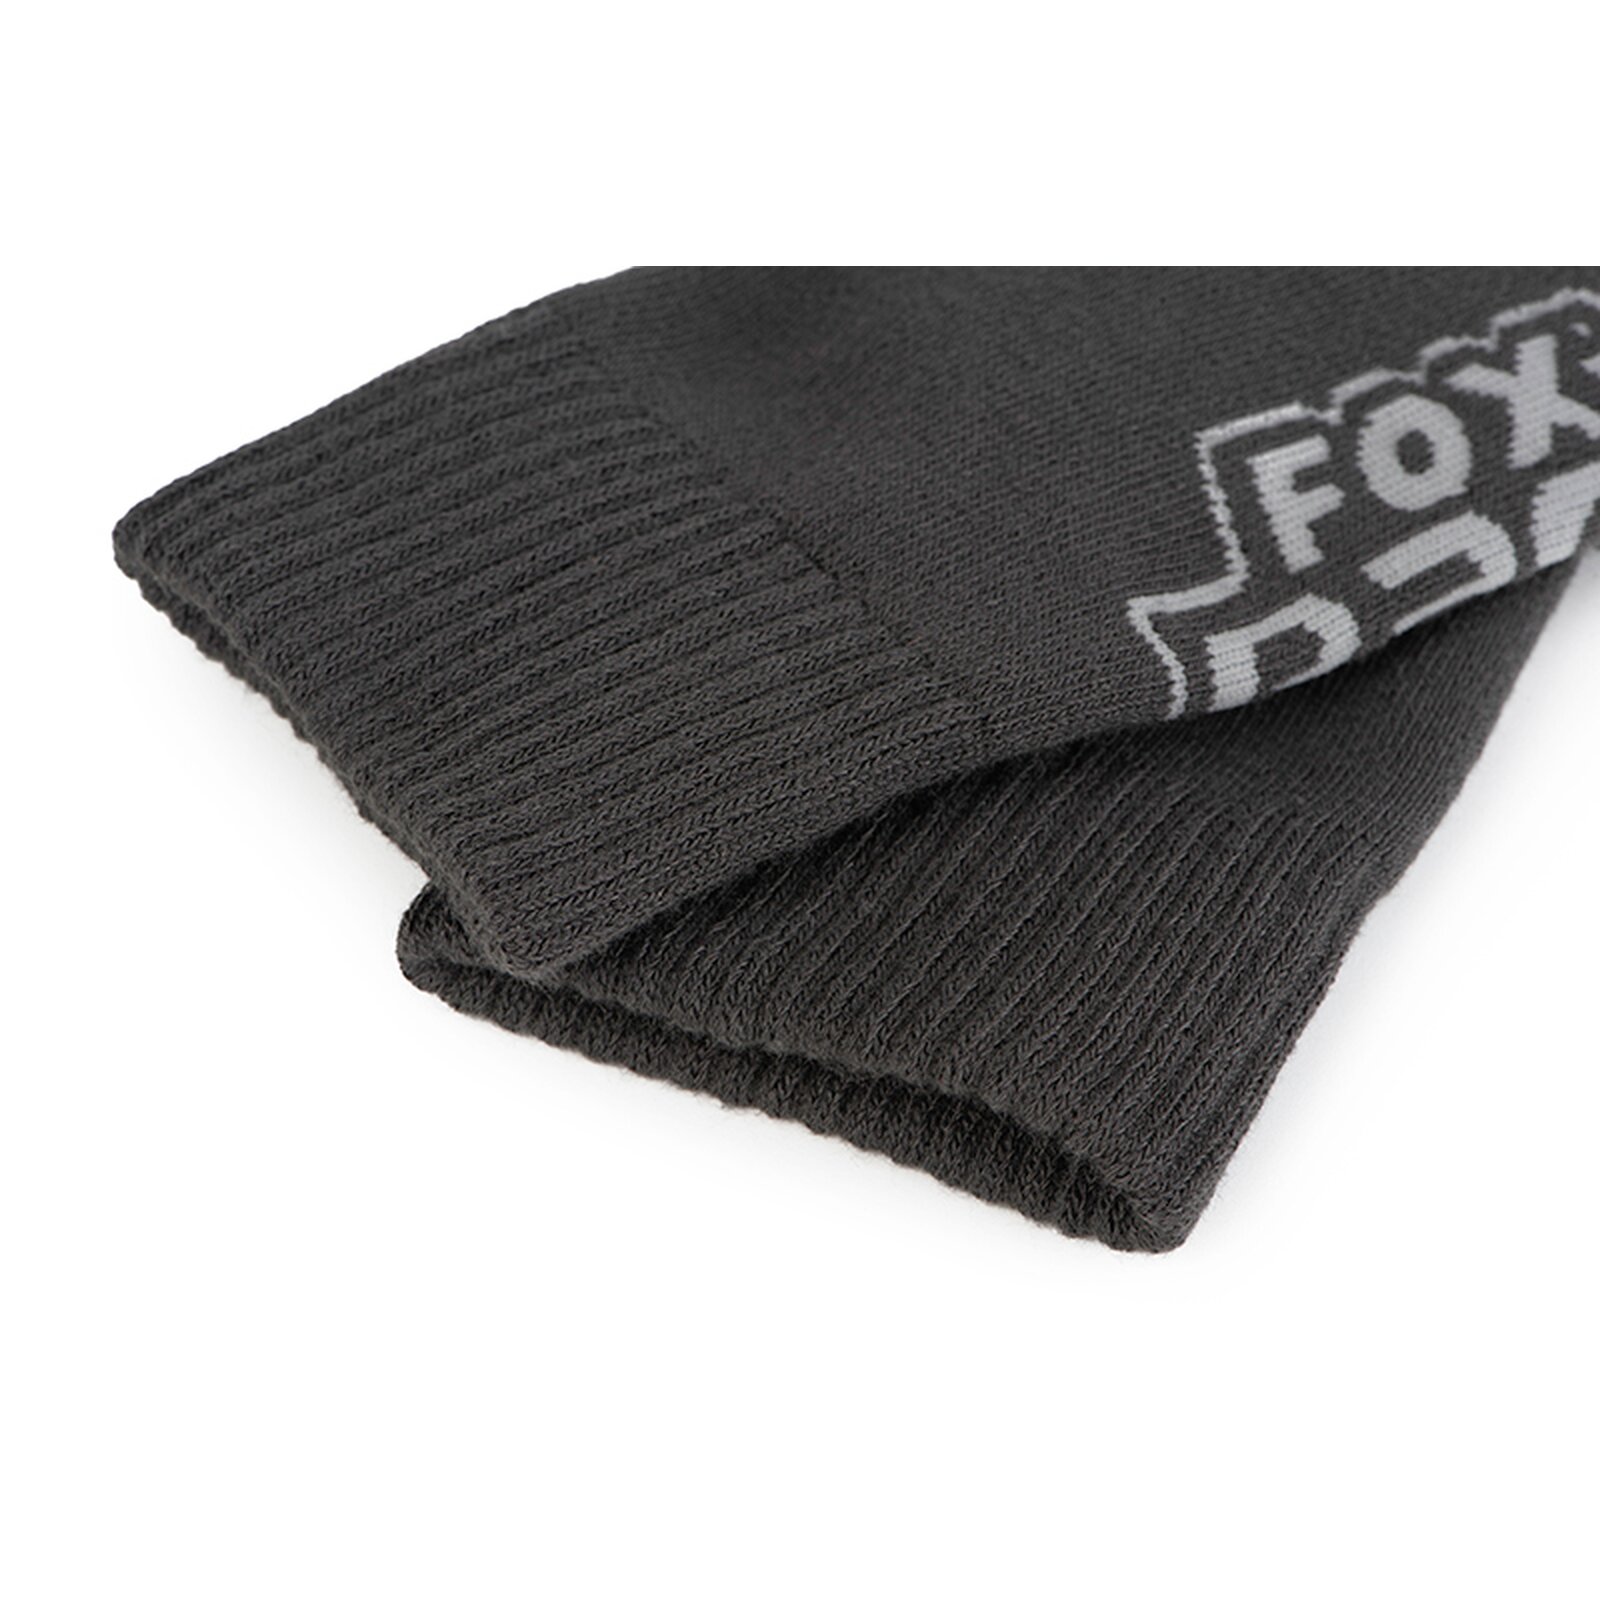 FOX Rage Thermolite Socks